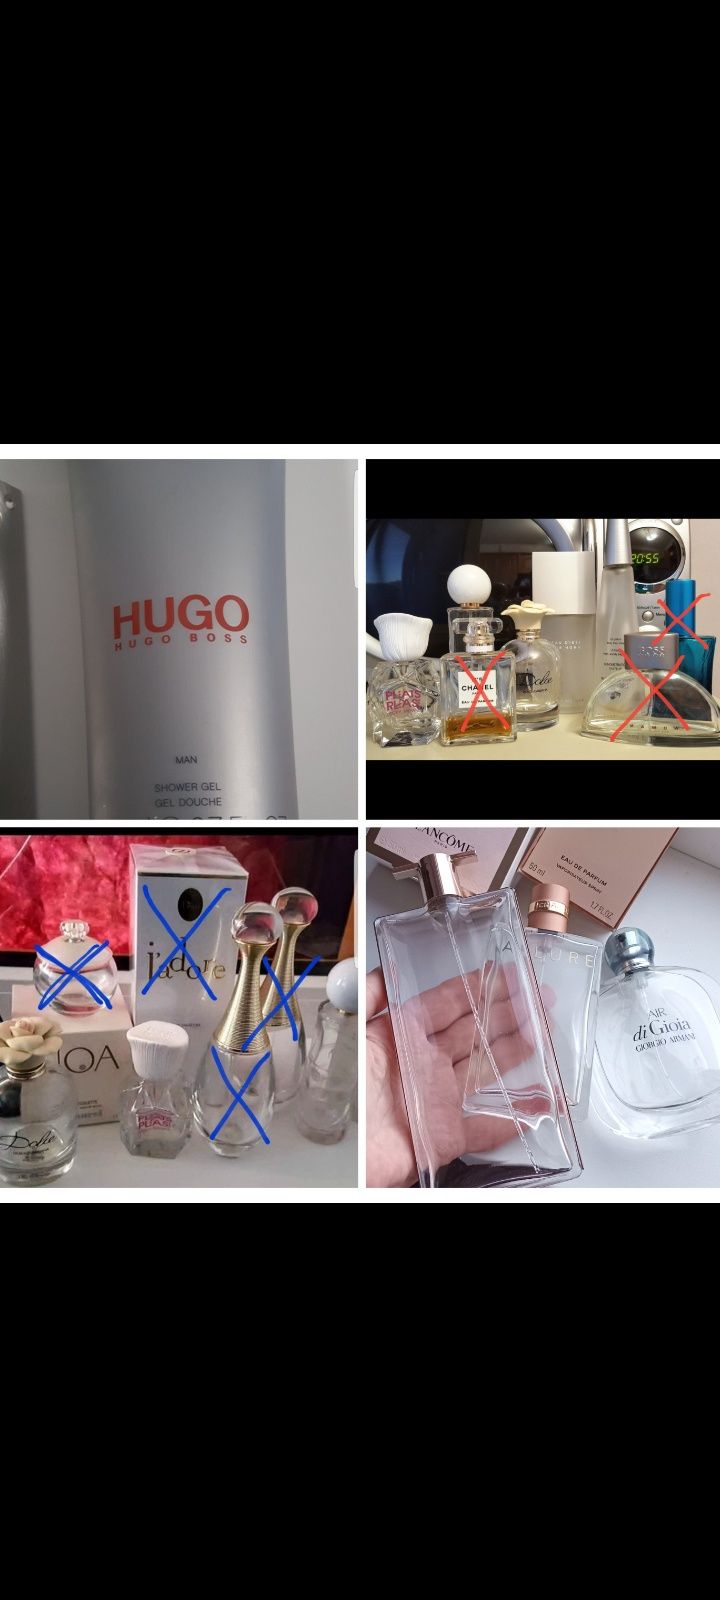 Гель душ Hugo Boss man парфюм оригинал 200 мл .Пустые флаконы